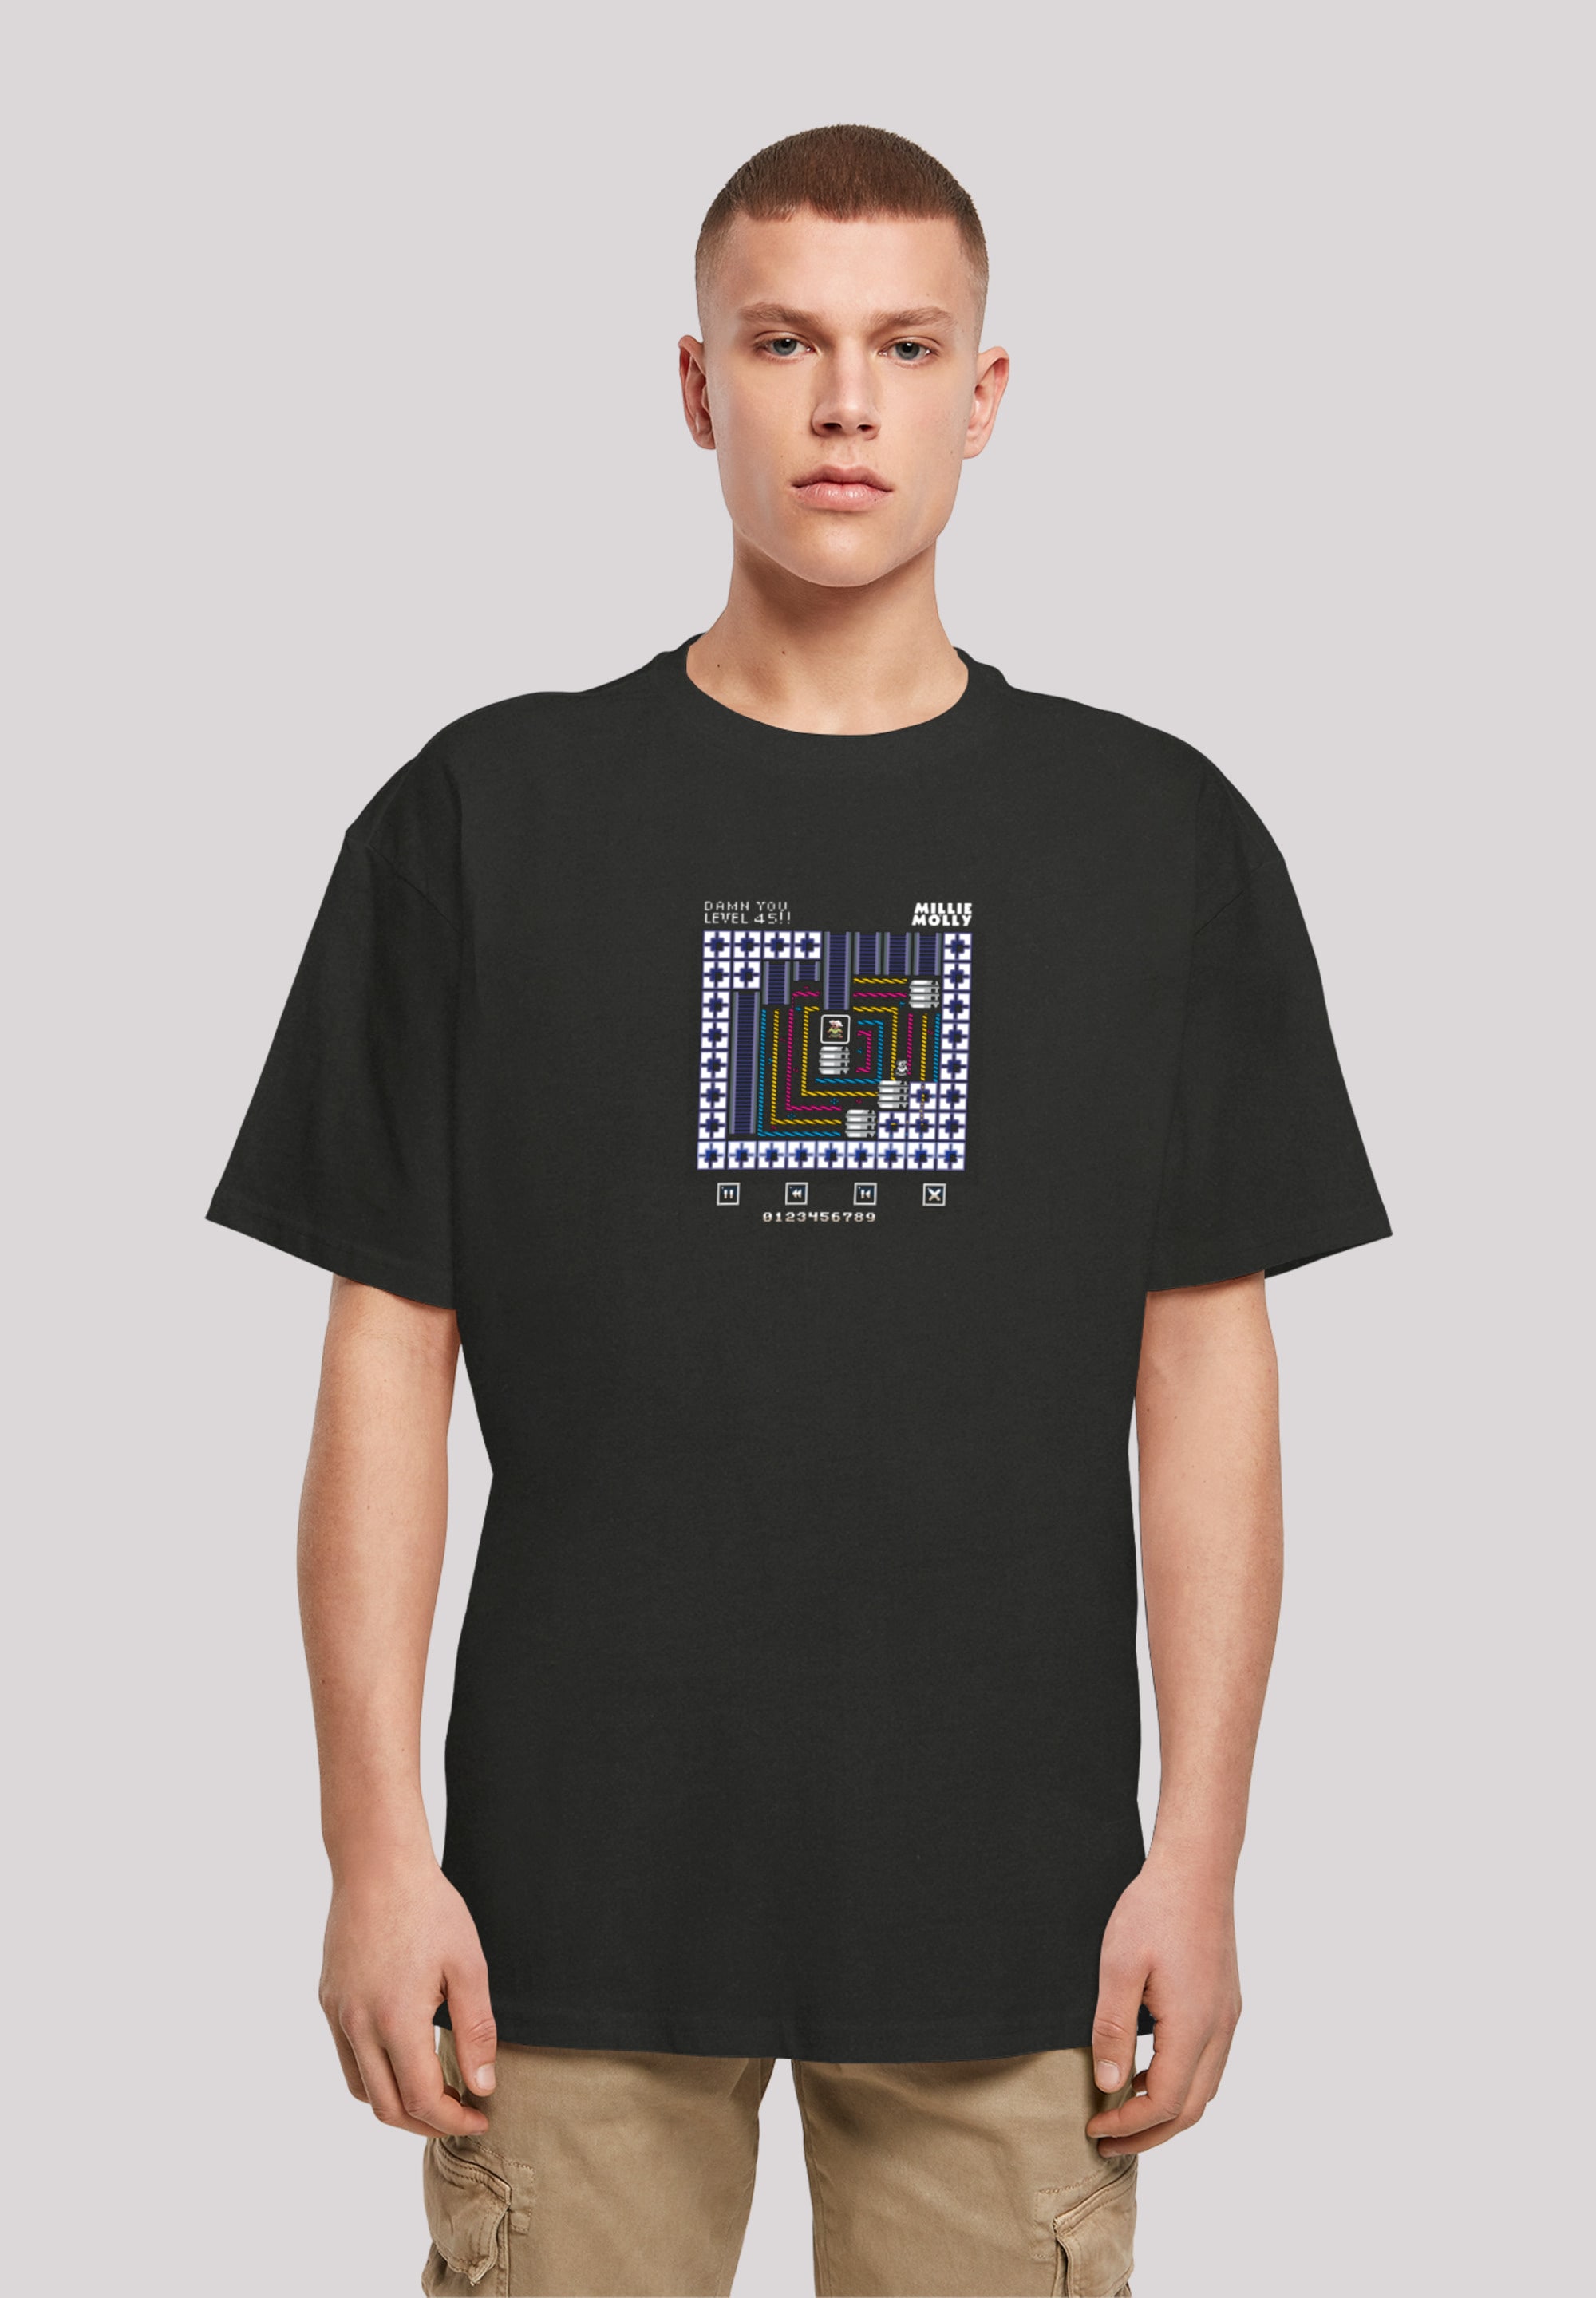 T-Shirt »Level 45 Millie Mollie C64 Retro Gaming SEVENSQUARED«, Print